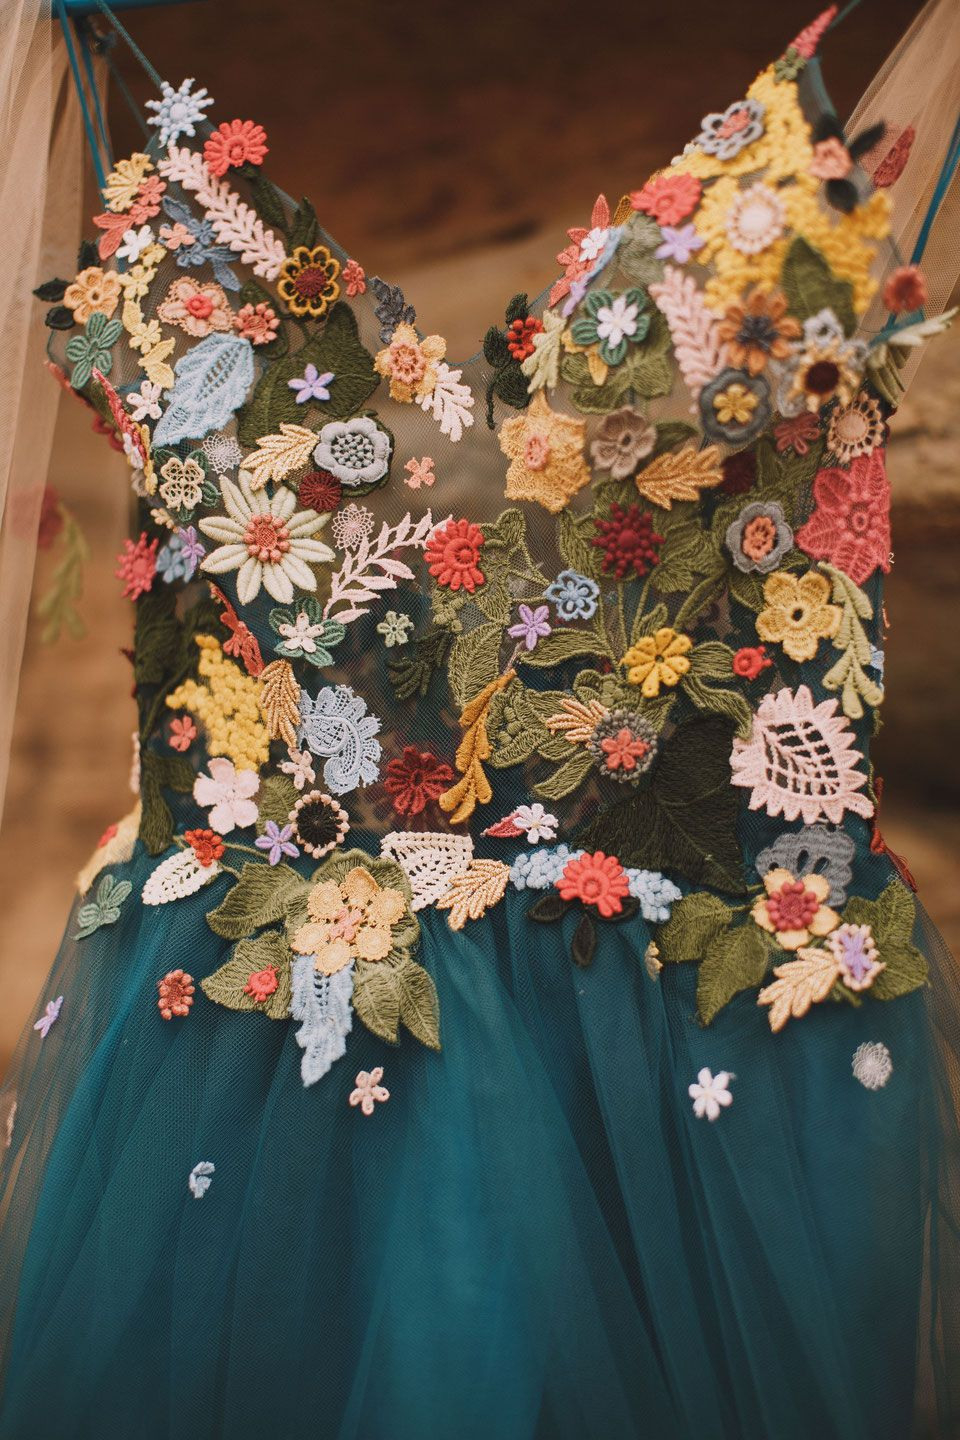 Handmade Dresses From Berlin - Puyansahebdjavaher Handmade